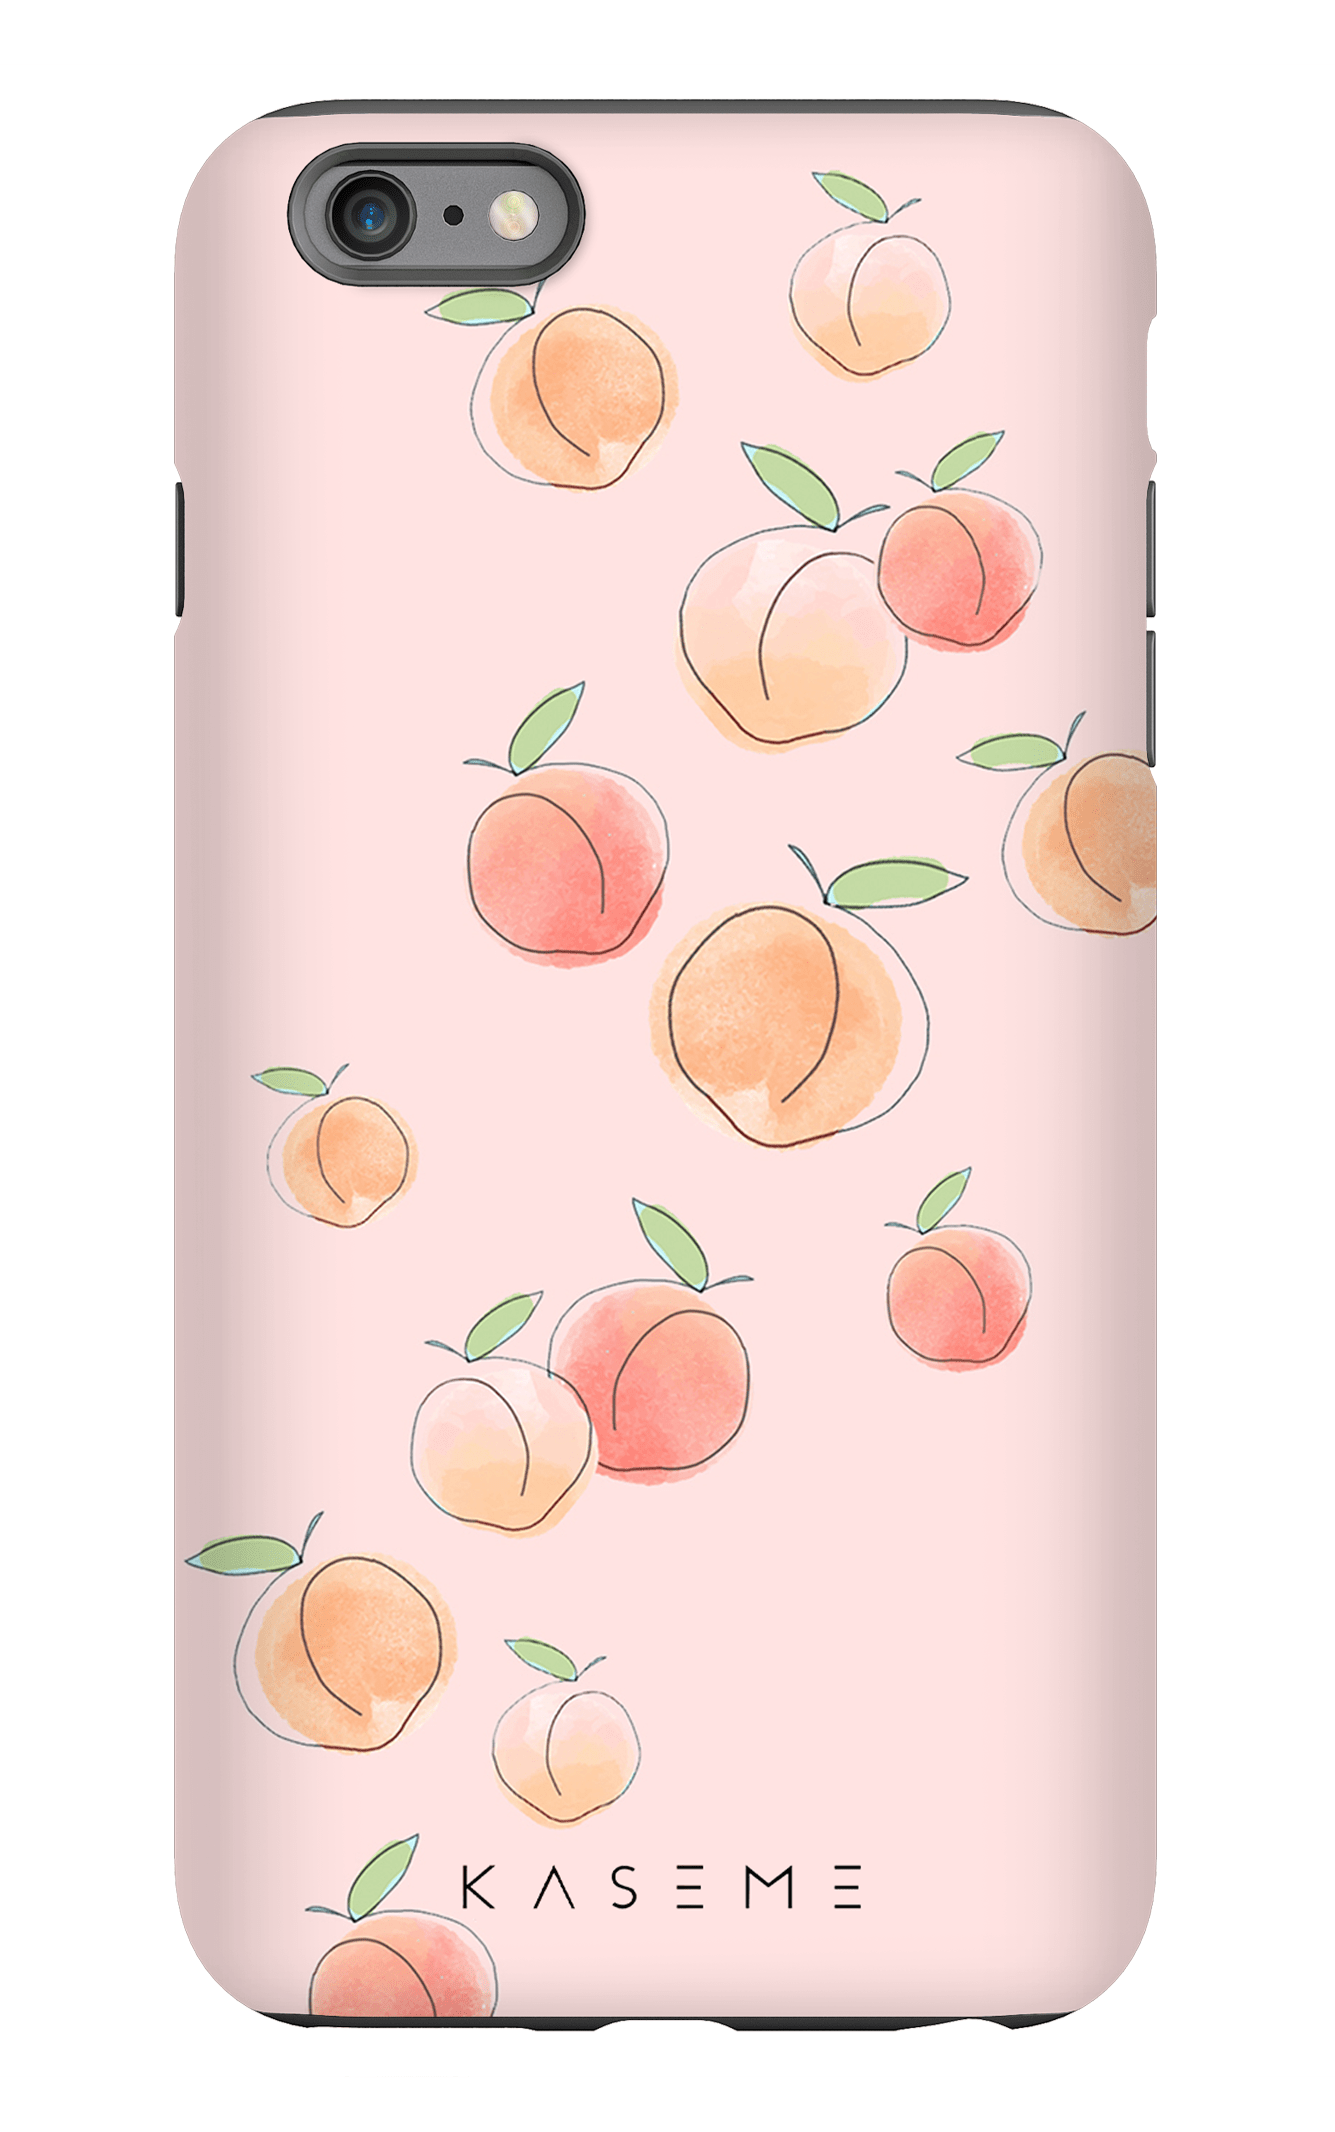 Peachy pink - iPhone 6/6s Plus